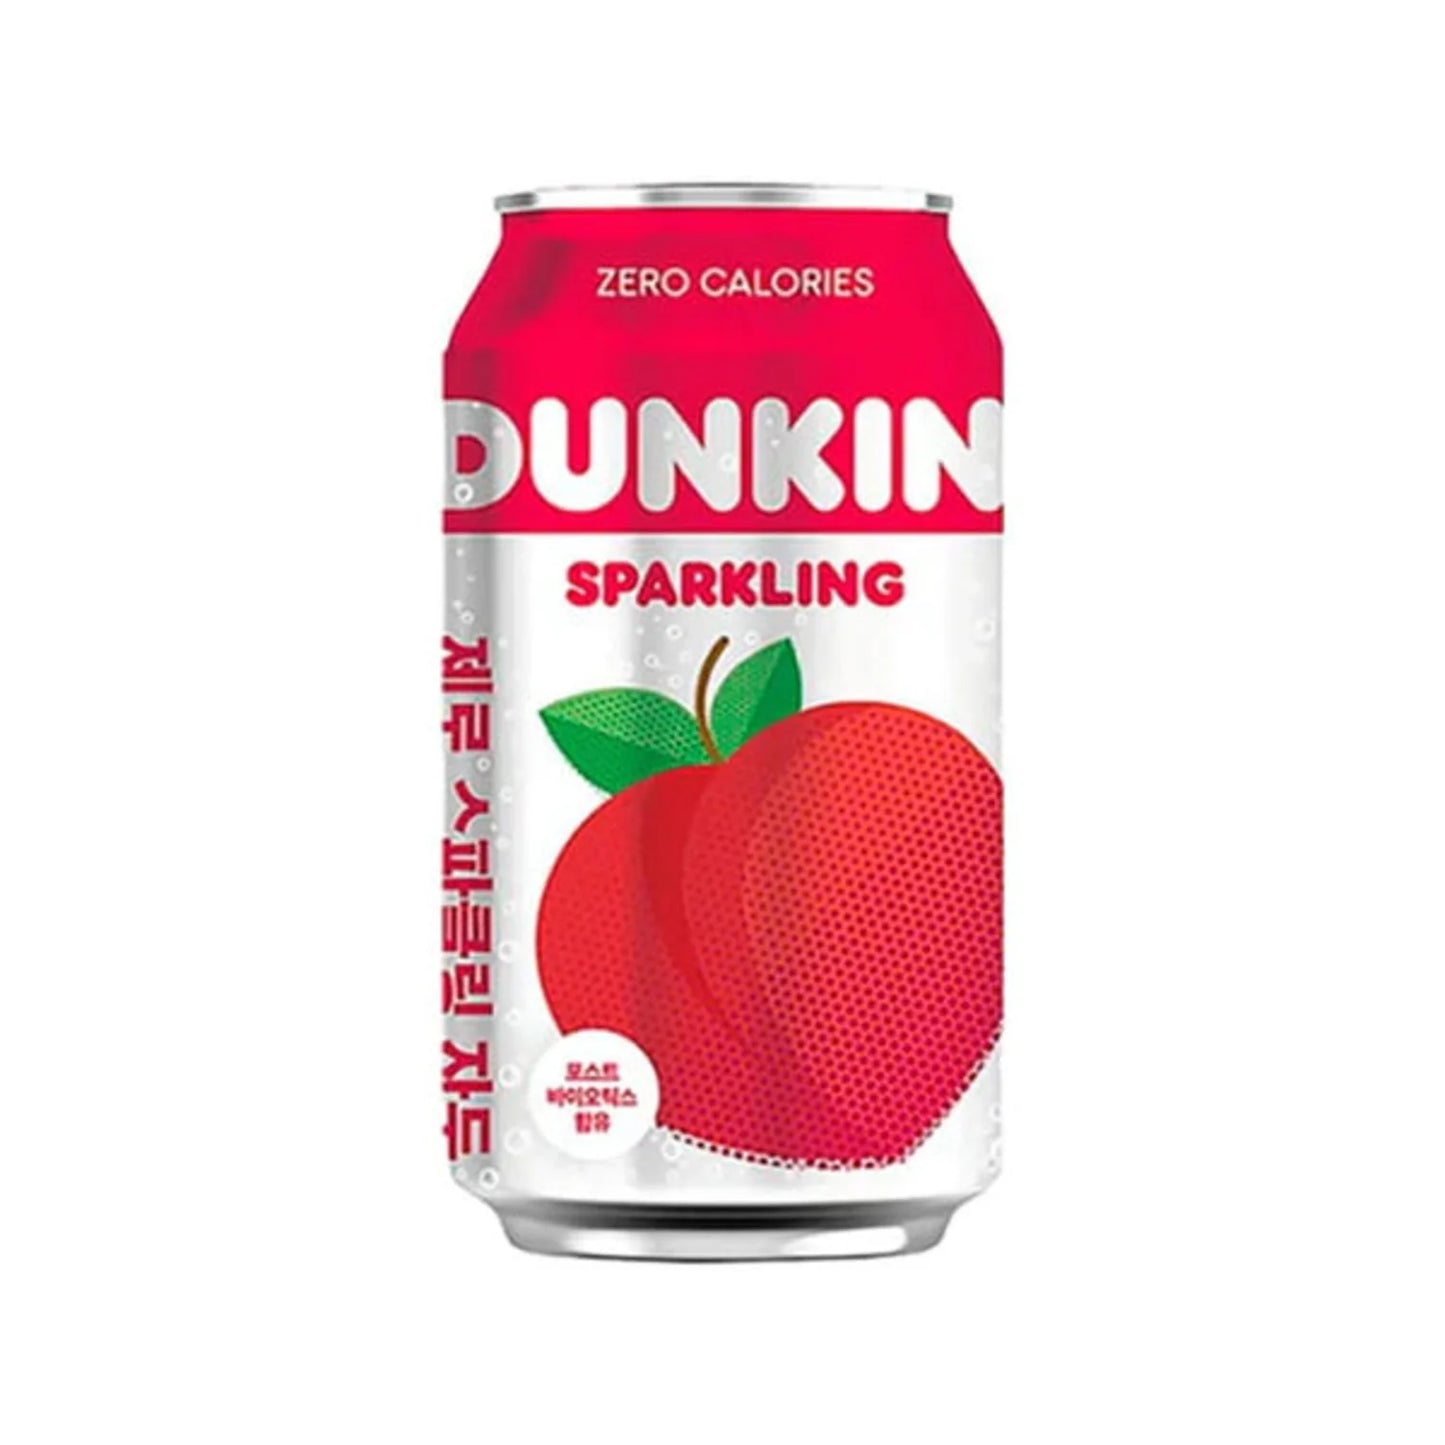 Dunkin' Sparkling Soda - Plum 330ml 24ct (Korea) (Shipping Extra, Click for Details)